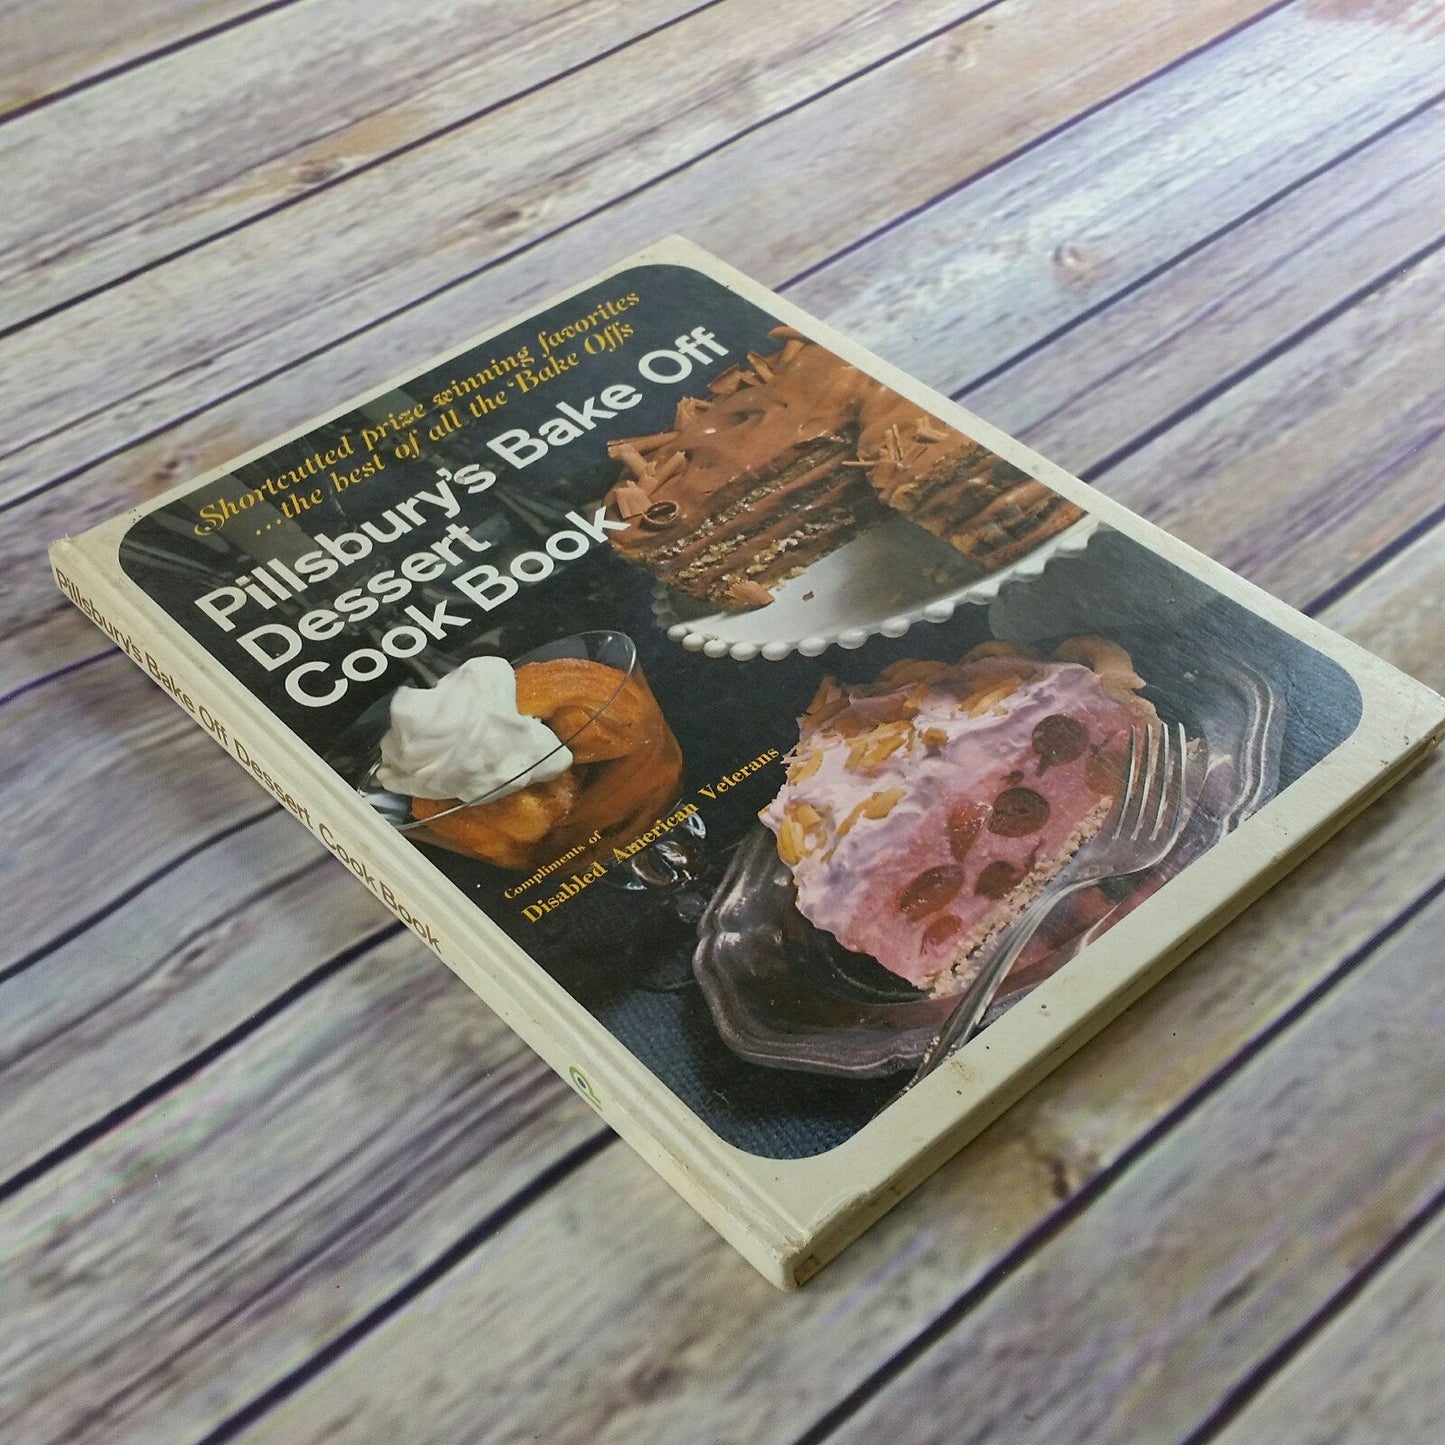 Vintage Cookbook Pillsbury Bake Off Dessert Cook Book Recipes Hardcover Booklet 1971 Compliments of Disabled American Veterans